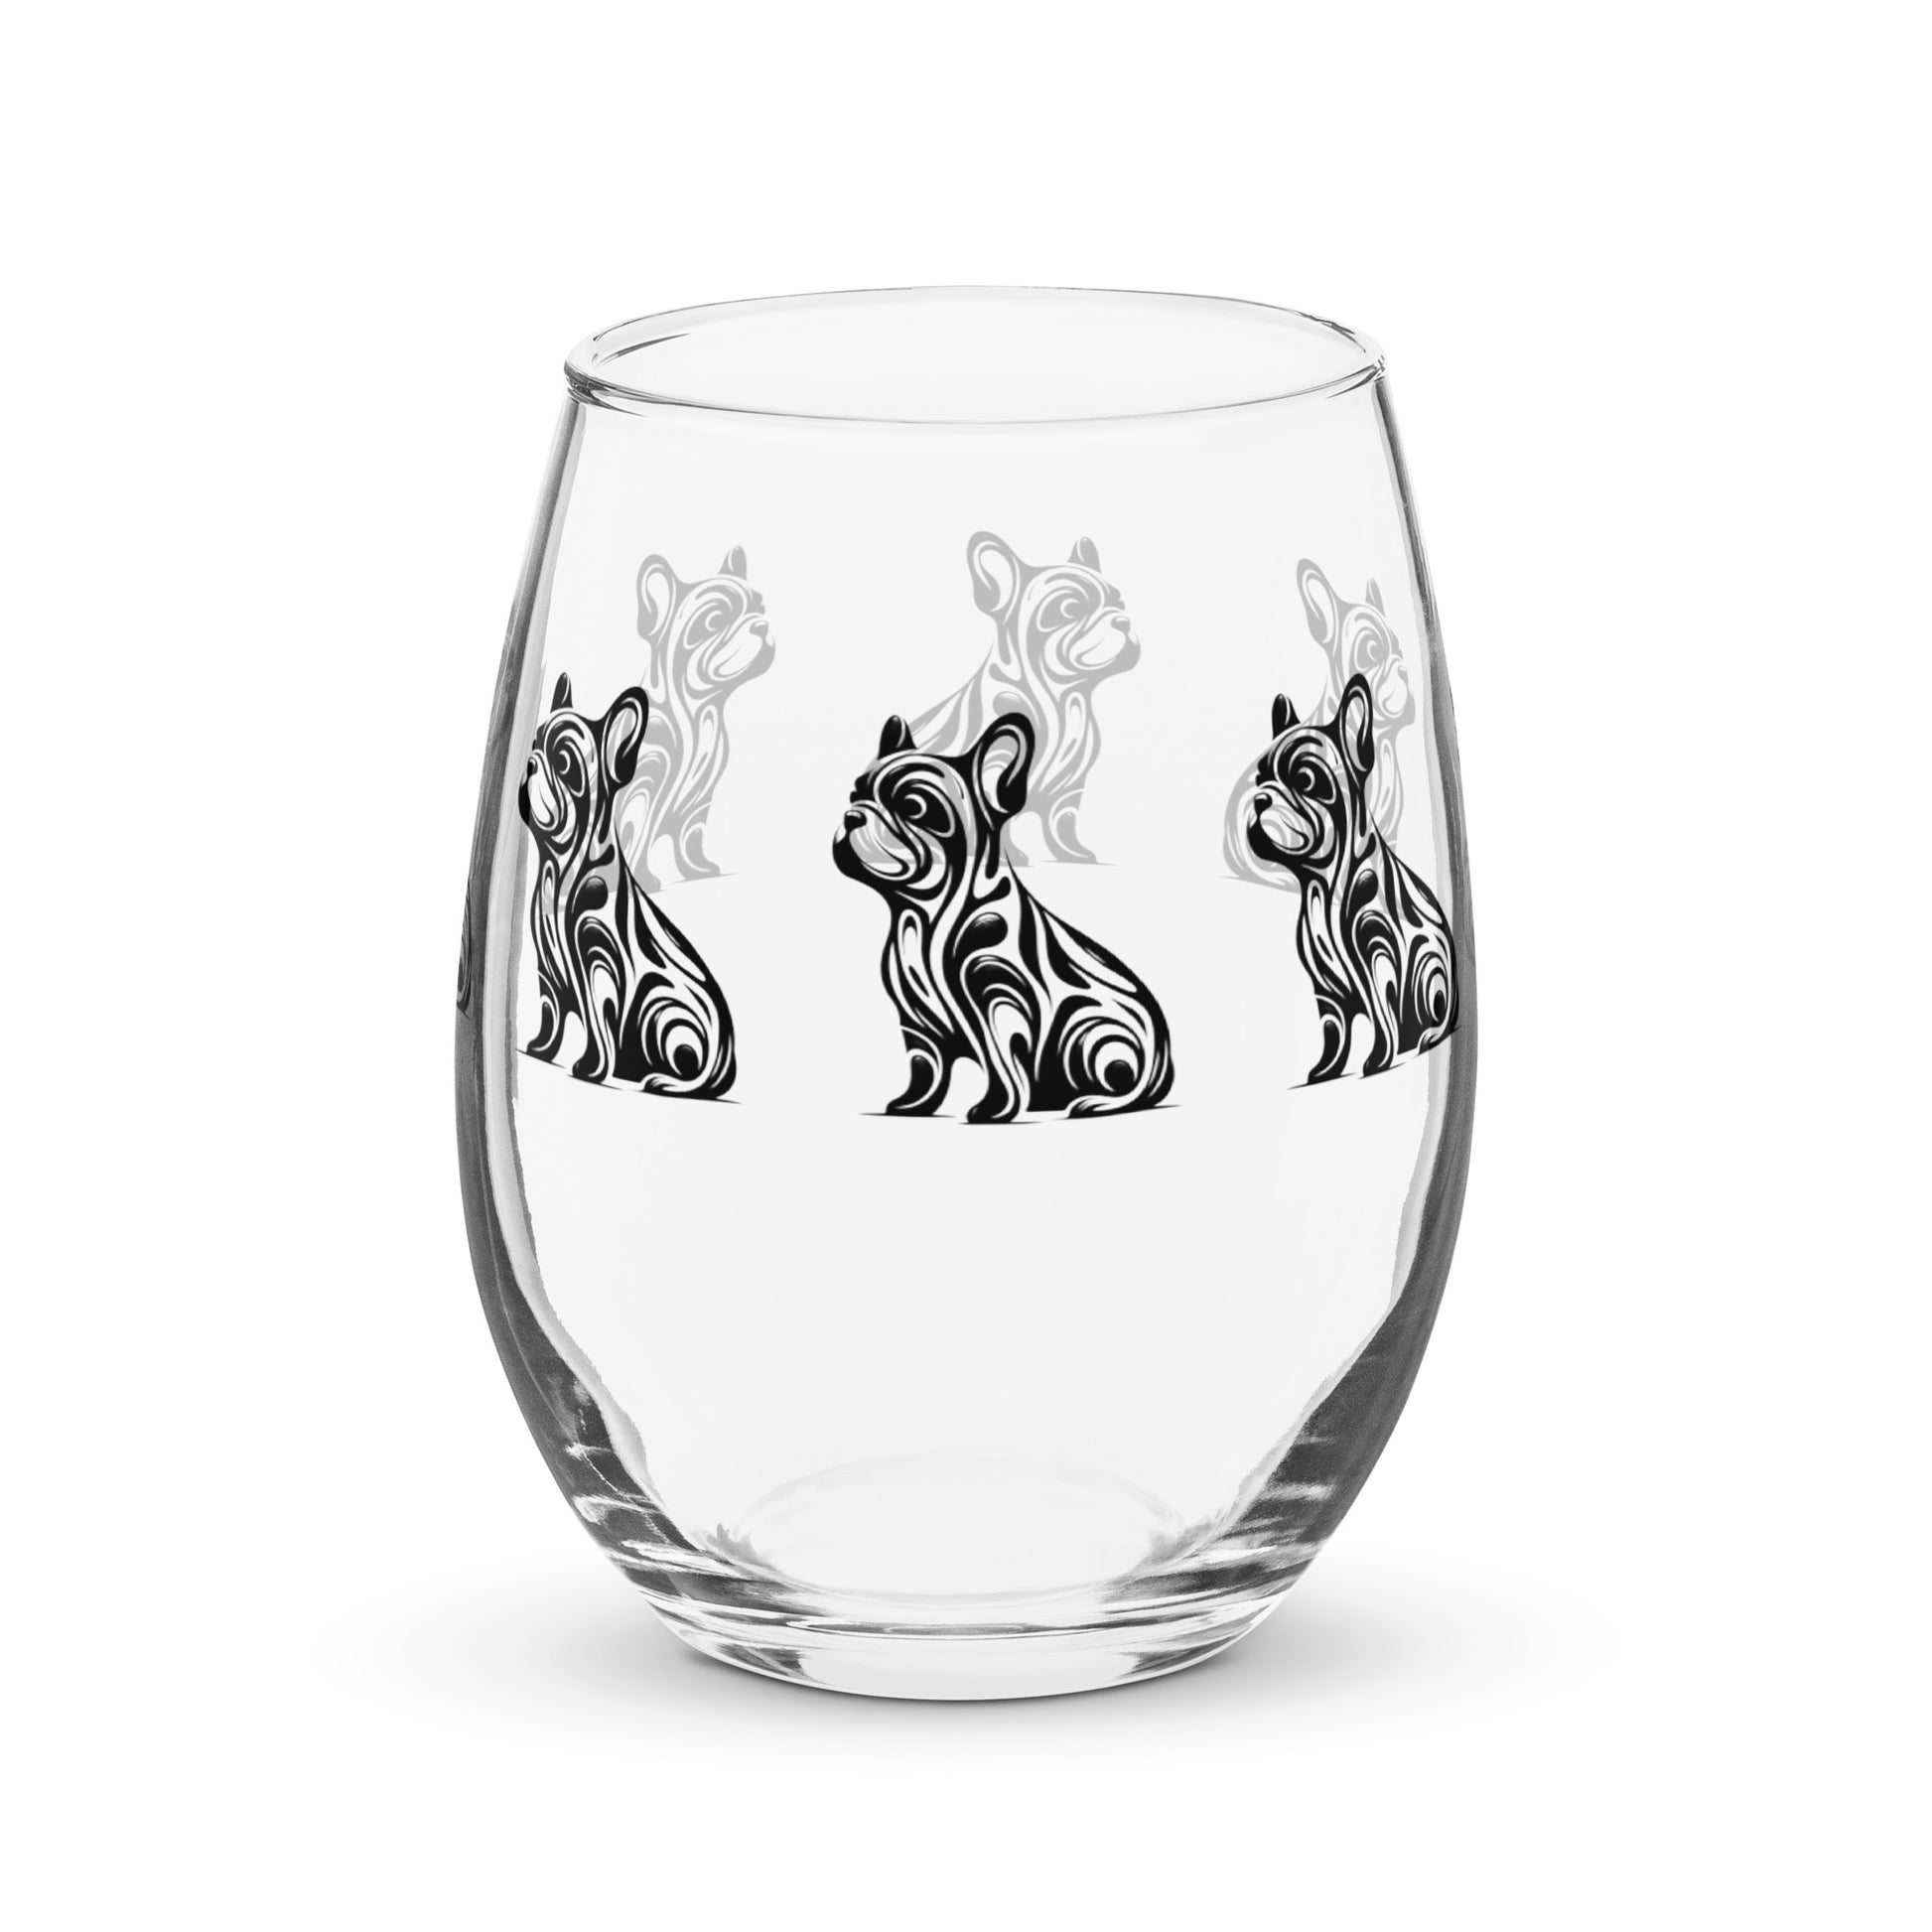 adrian del lago dog wine glass french bulldog french bulldog wine glass personalized wine glass wine glass